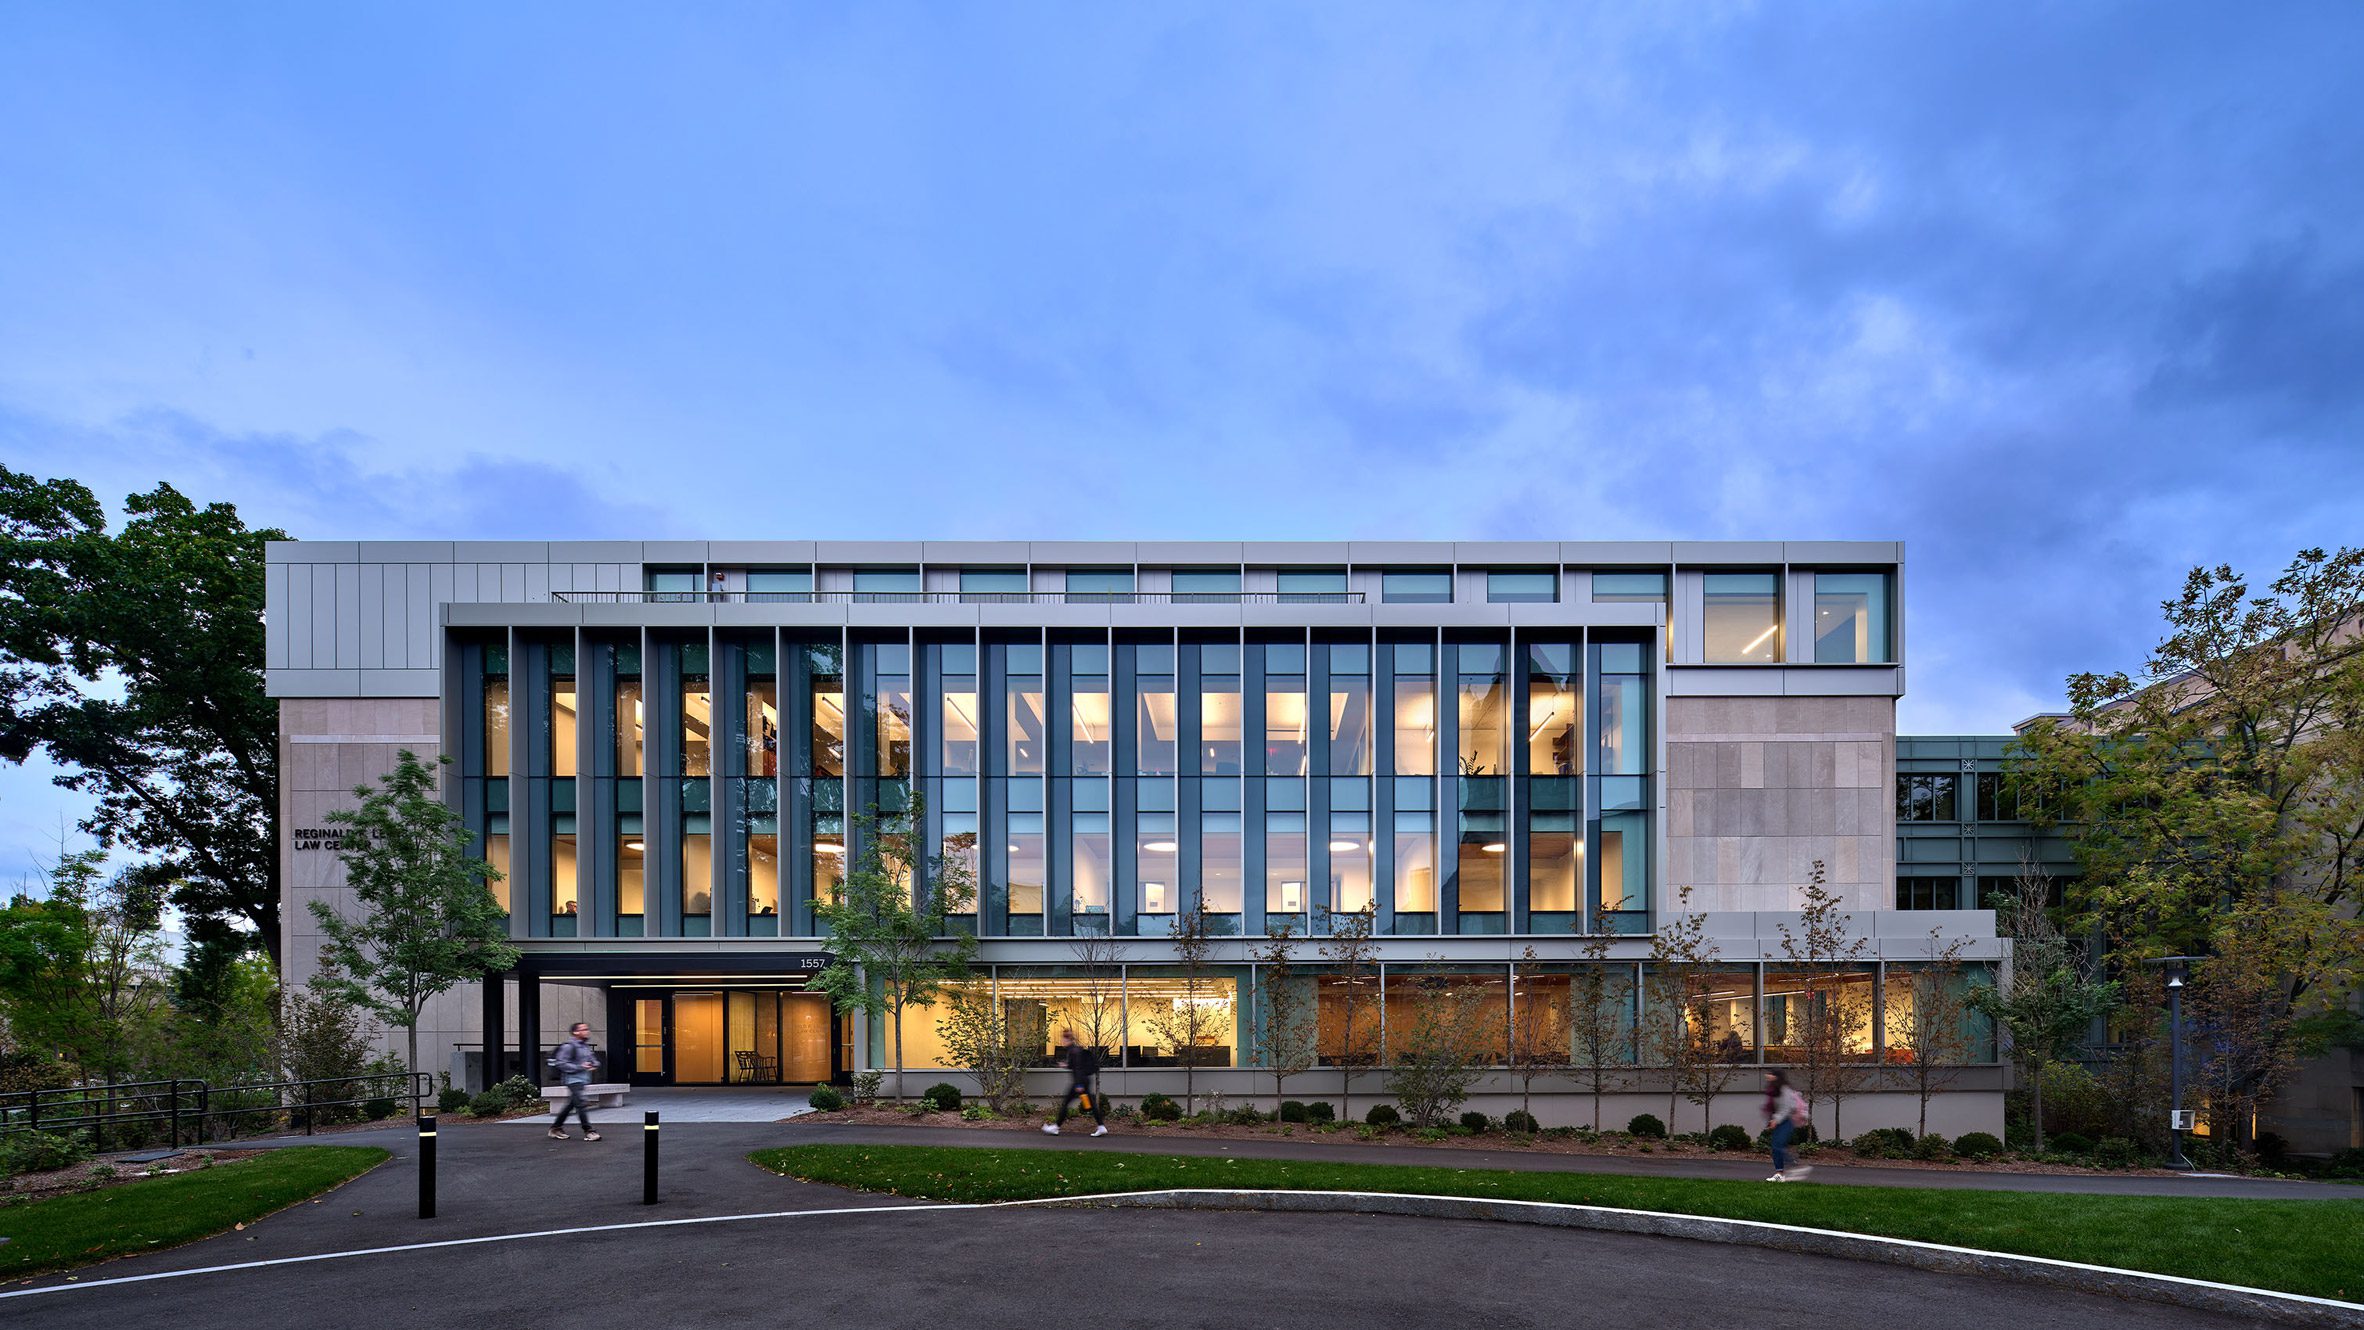 Rectilinear Lewis International Law Center at Harvard University